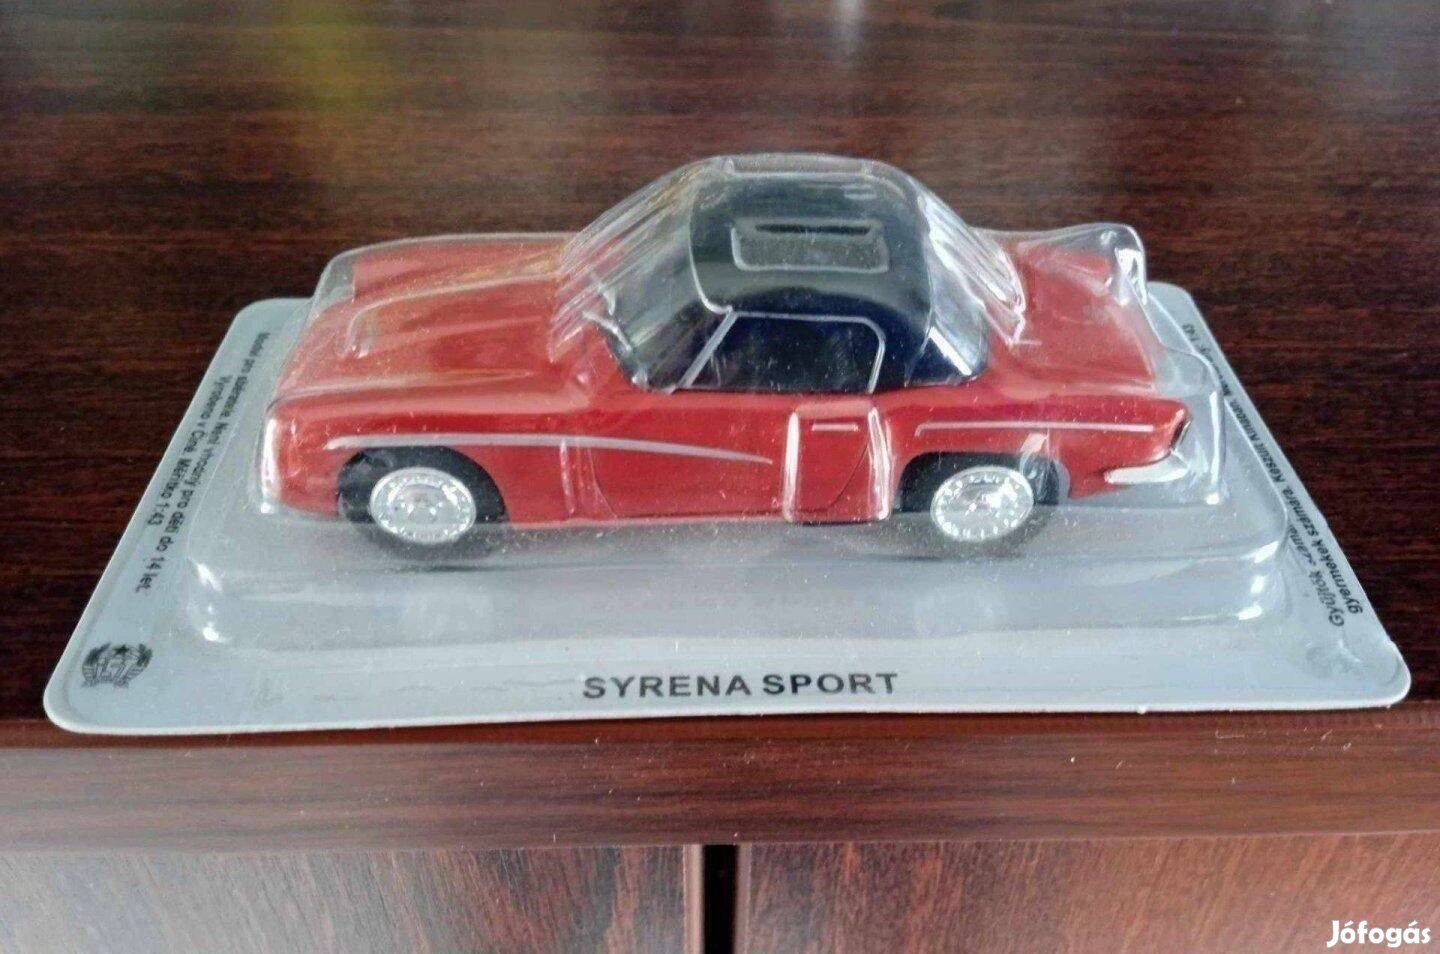 Syrena sport "kultowe" DEA kisauto modell 1/43 Eladó